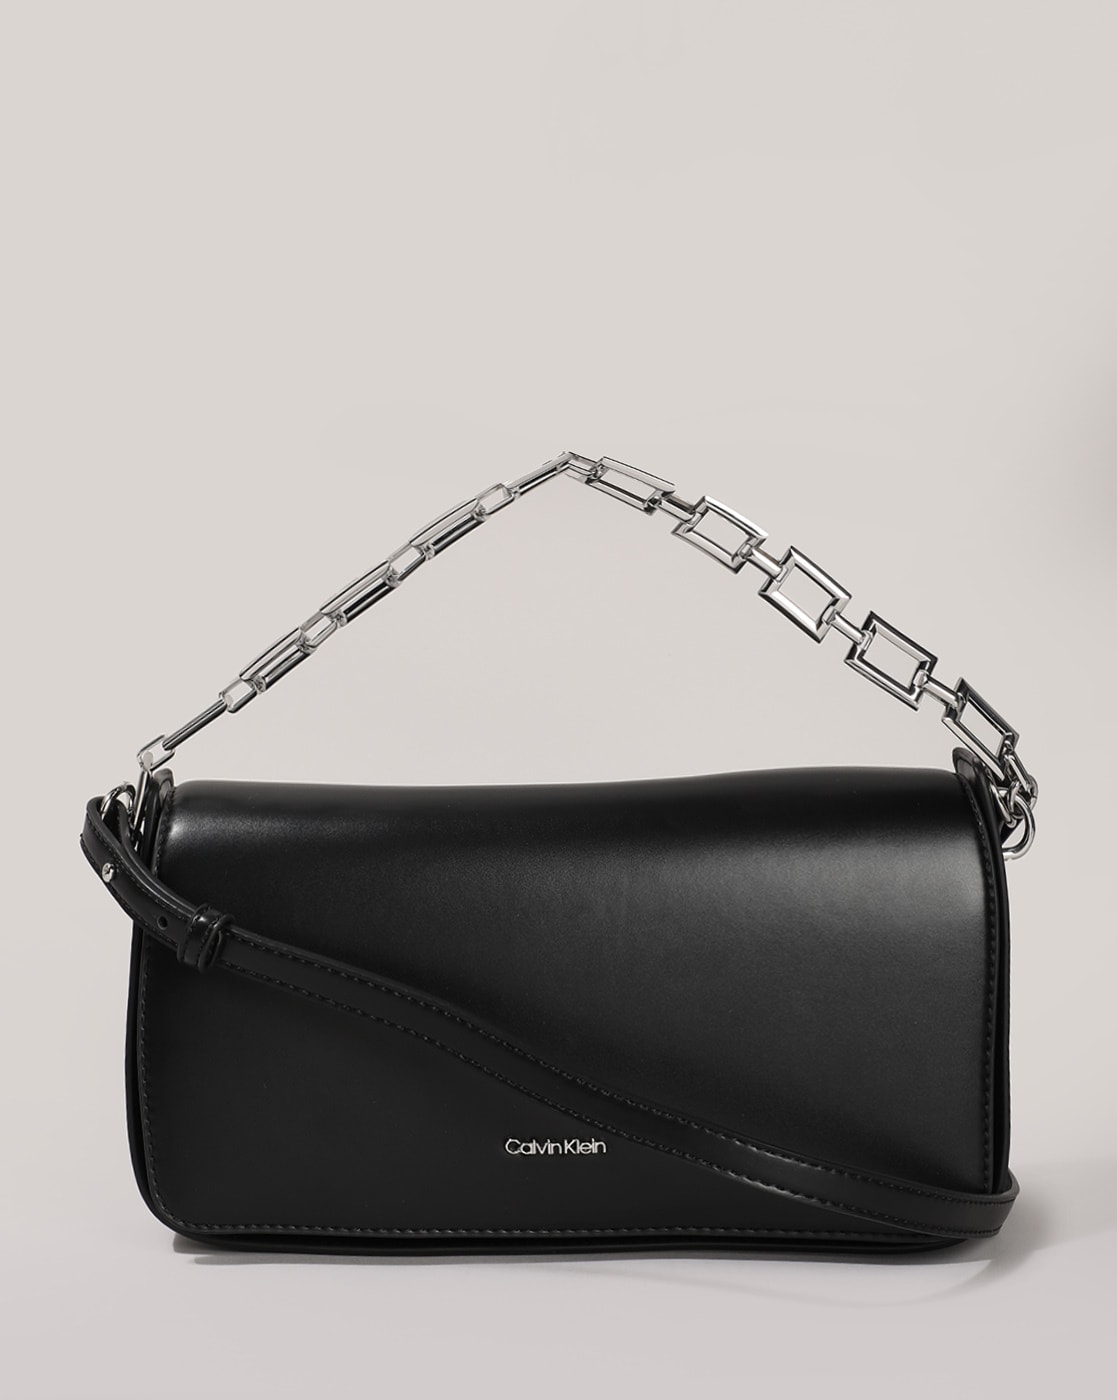 Calvin Klein Handbag for Sale in Pasadena, CA - OfferUp | Calvin klein  handbags, Handbags on sale, Women handbags